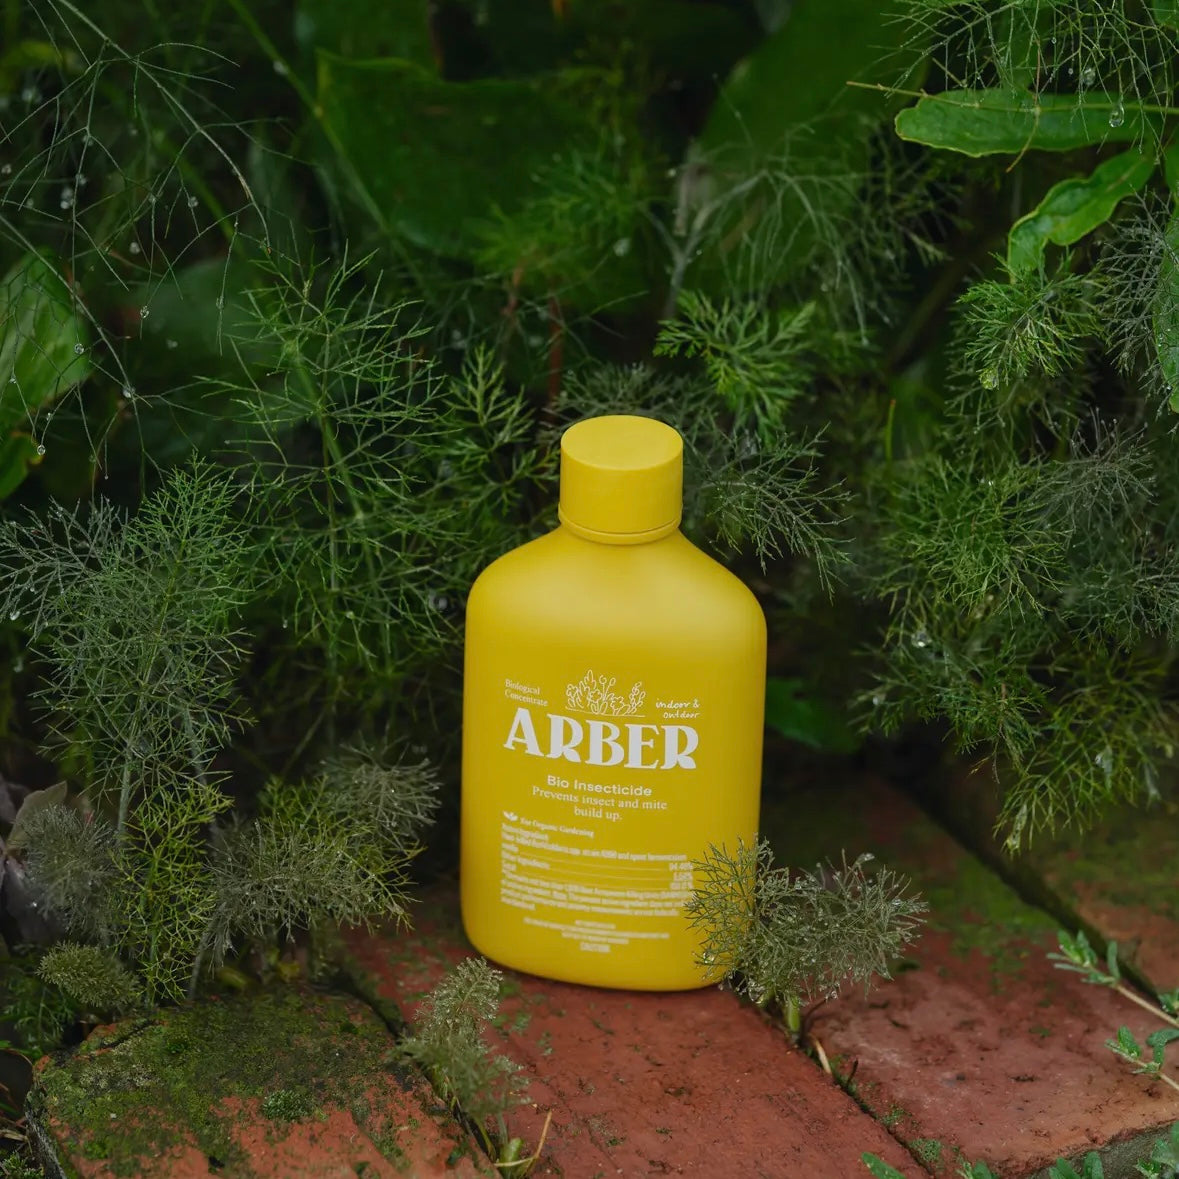 Arber Organic Bio Insecticide